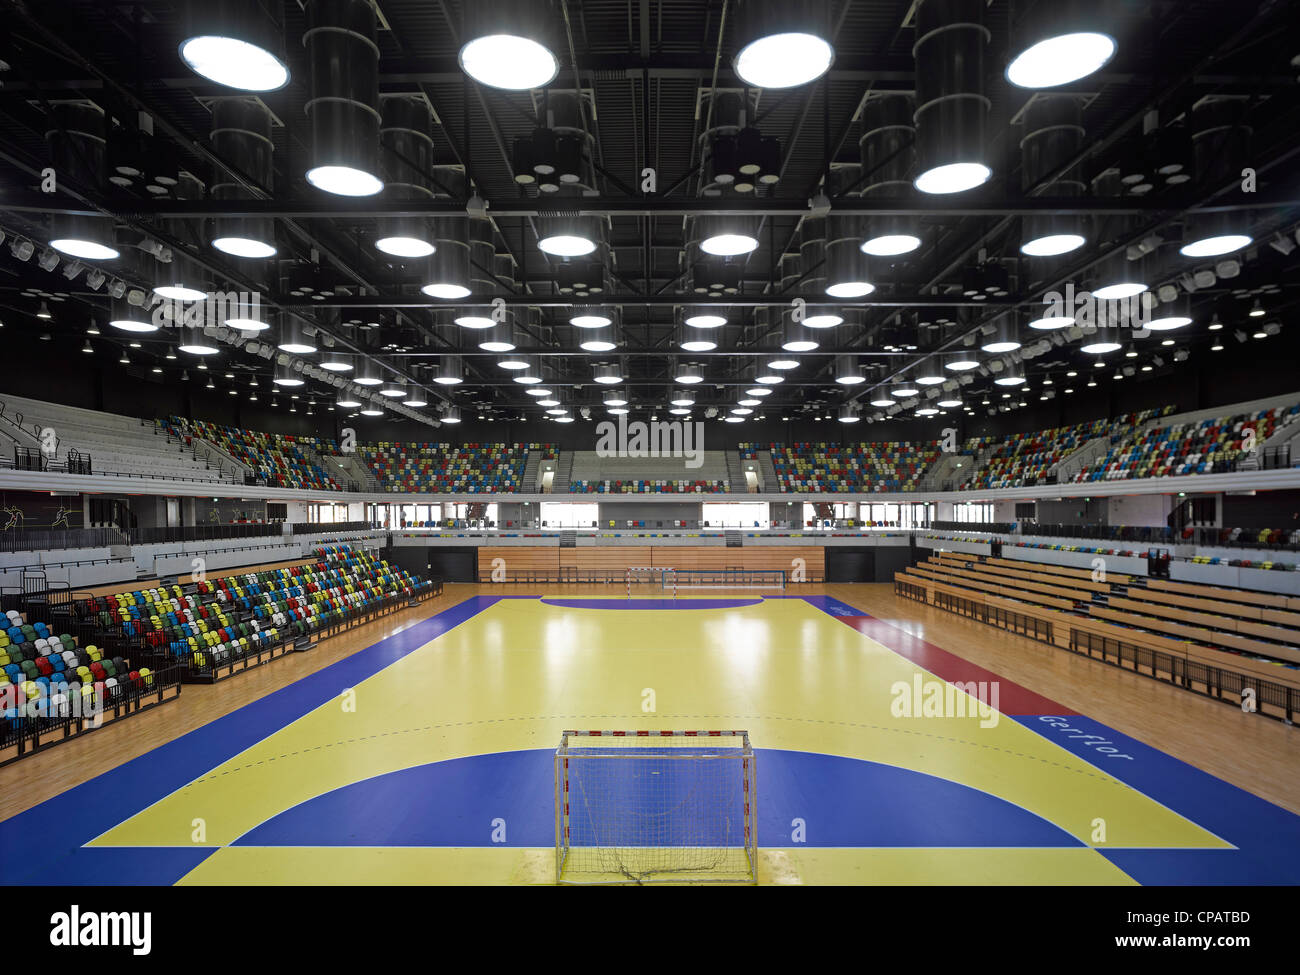 London 2012 Olympic Handball Arena, London, UK, 2011 Stock Photo